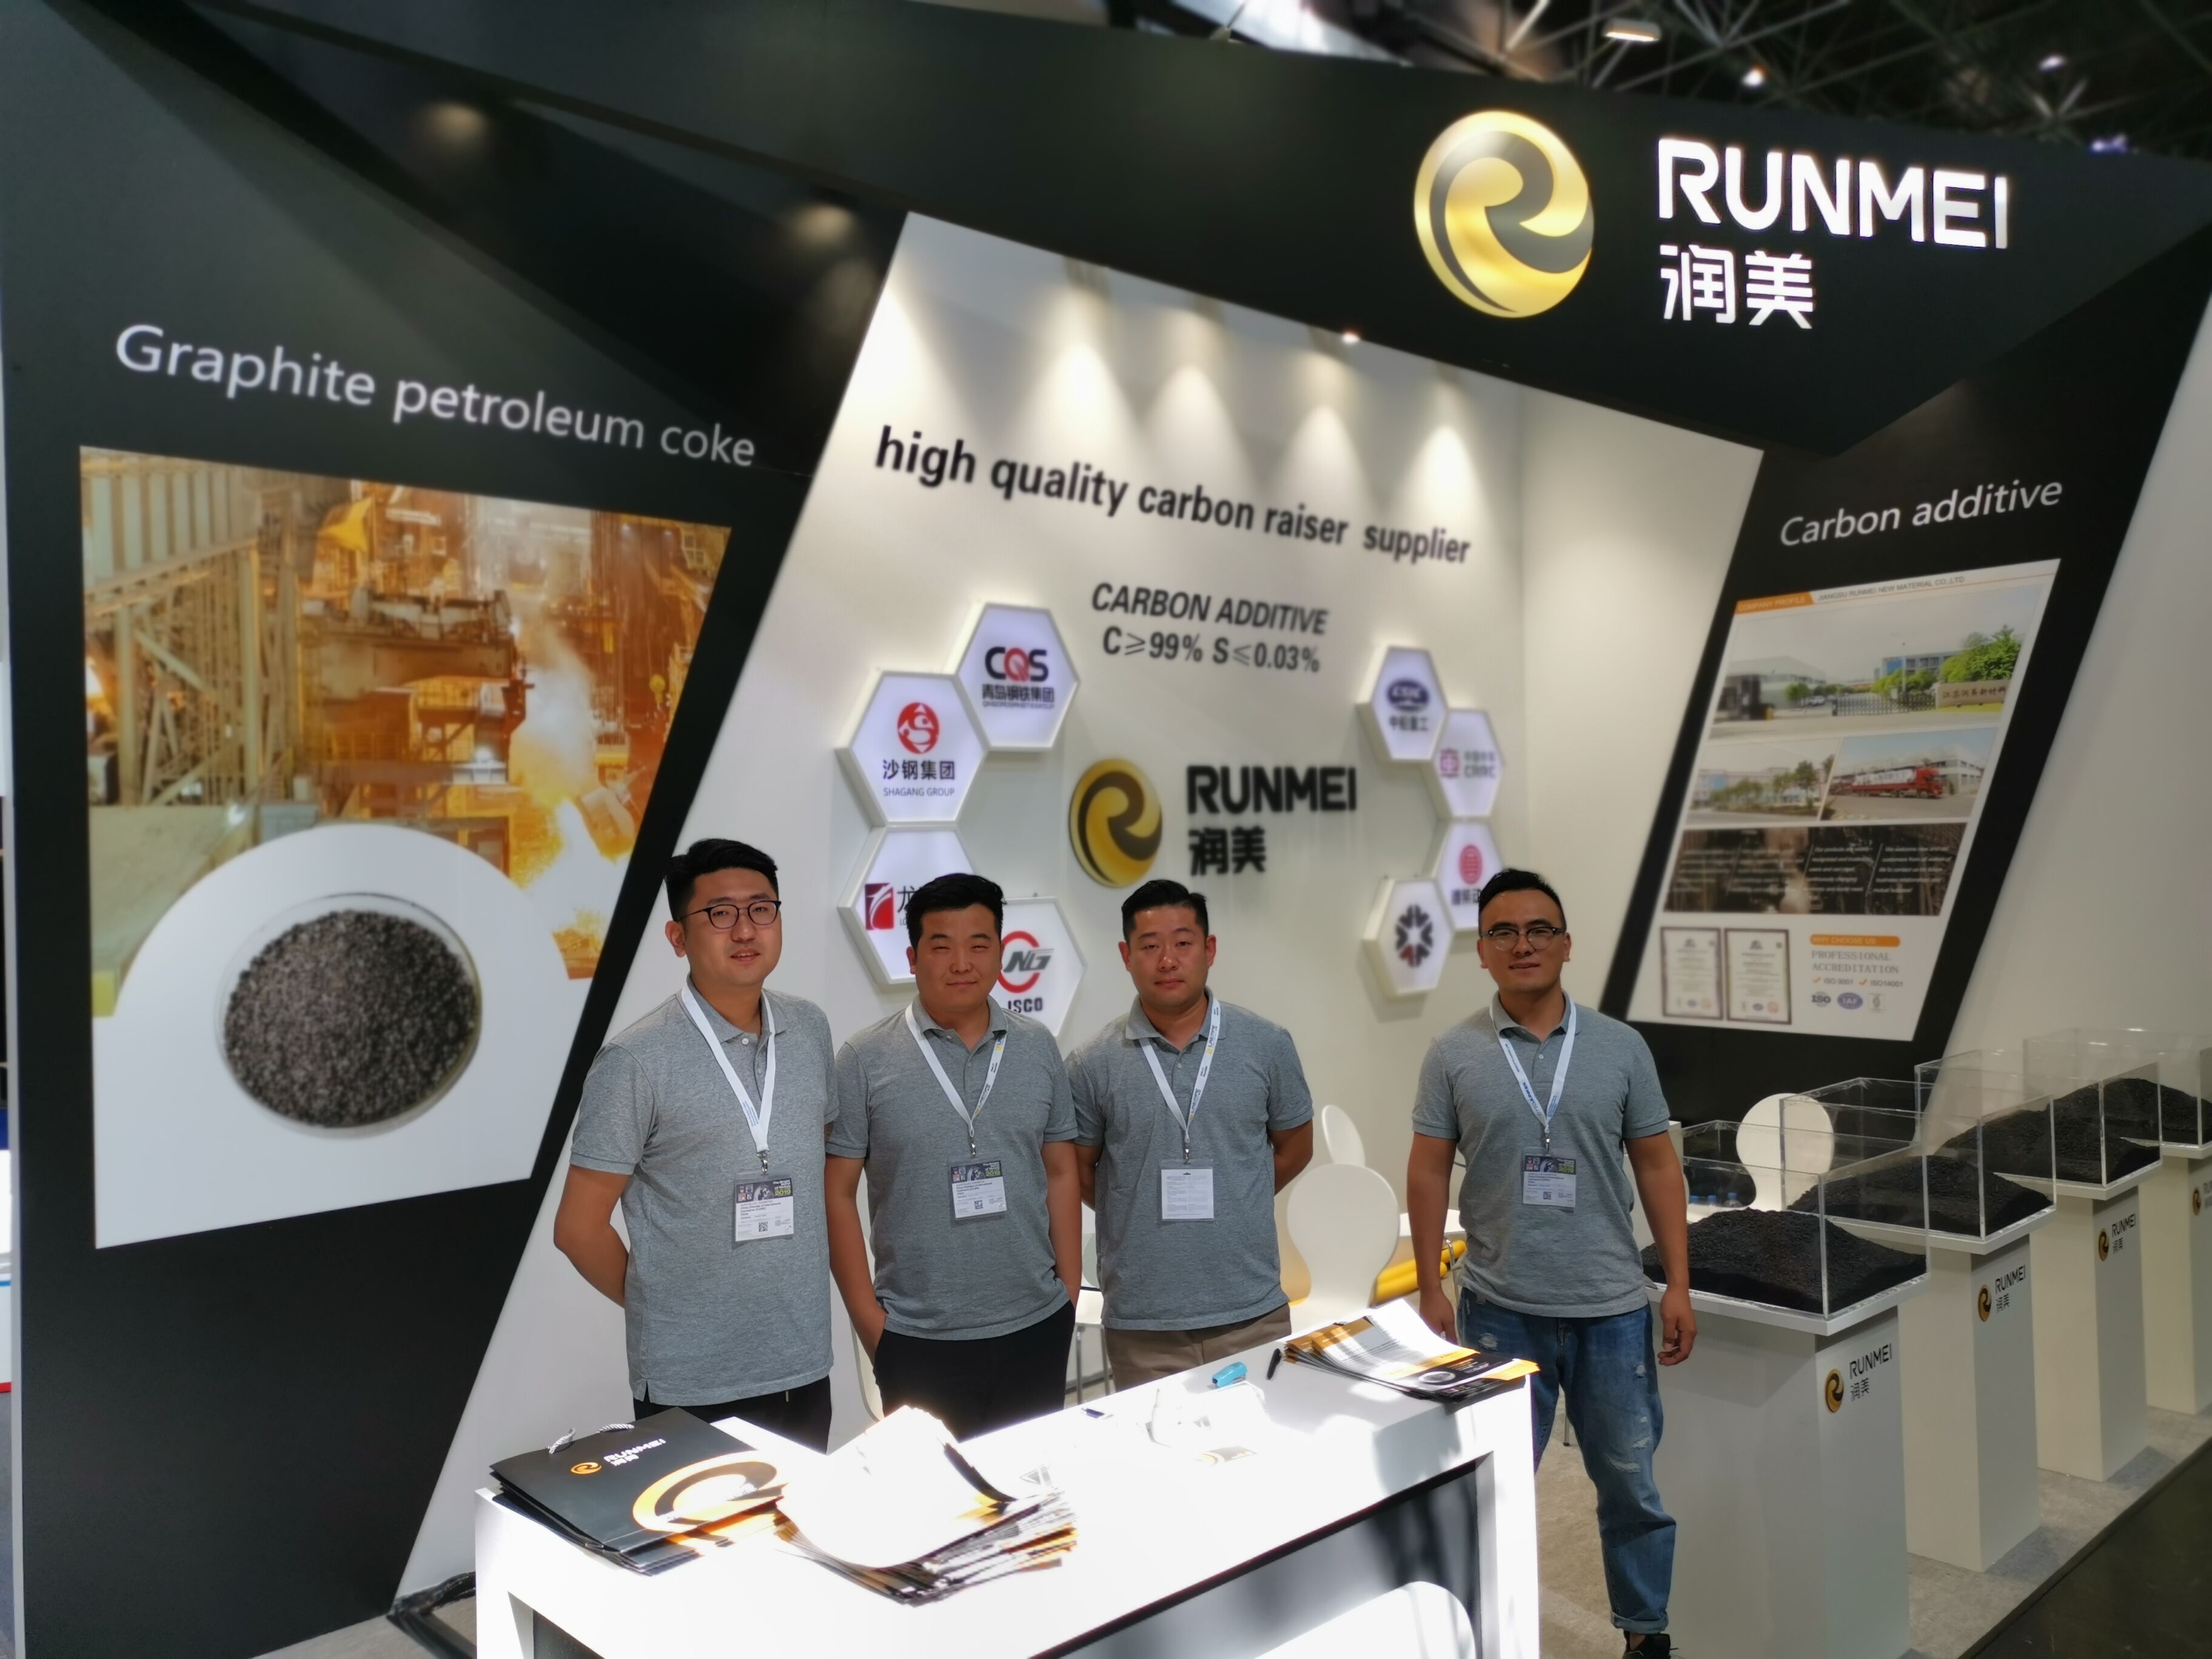 Jiangsu Runmei New Materials Co., Ltd. was successfully completed in 2019, Düsseldorf, Germany